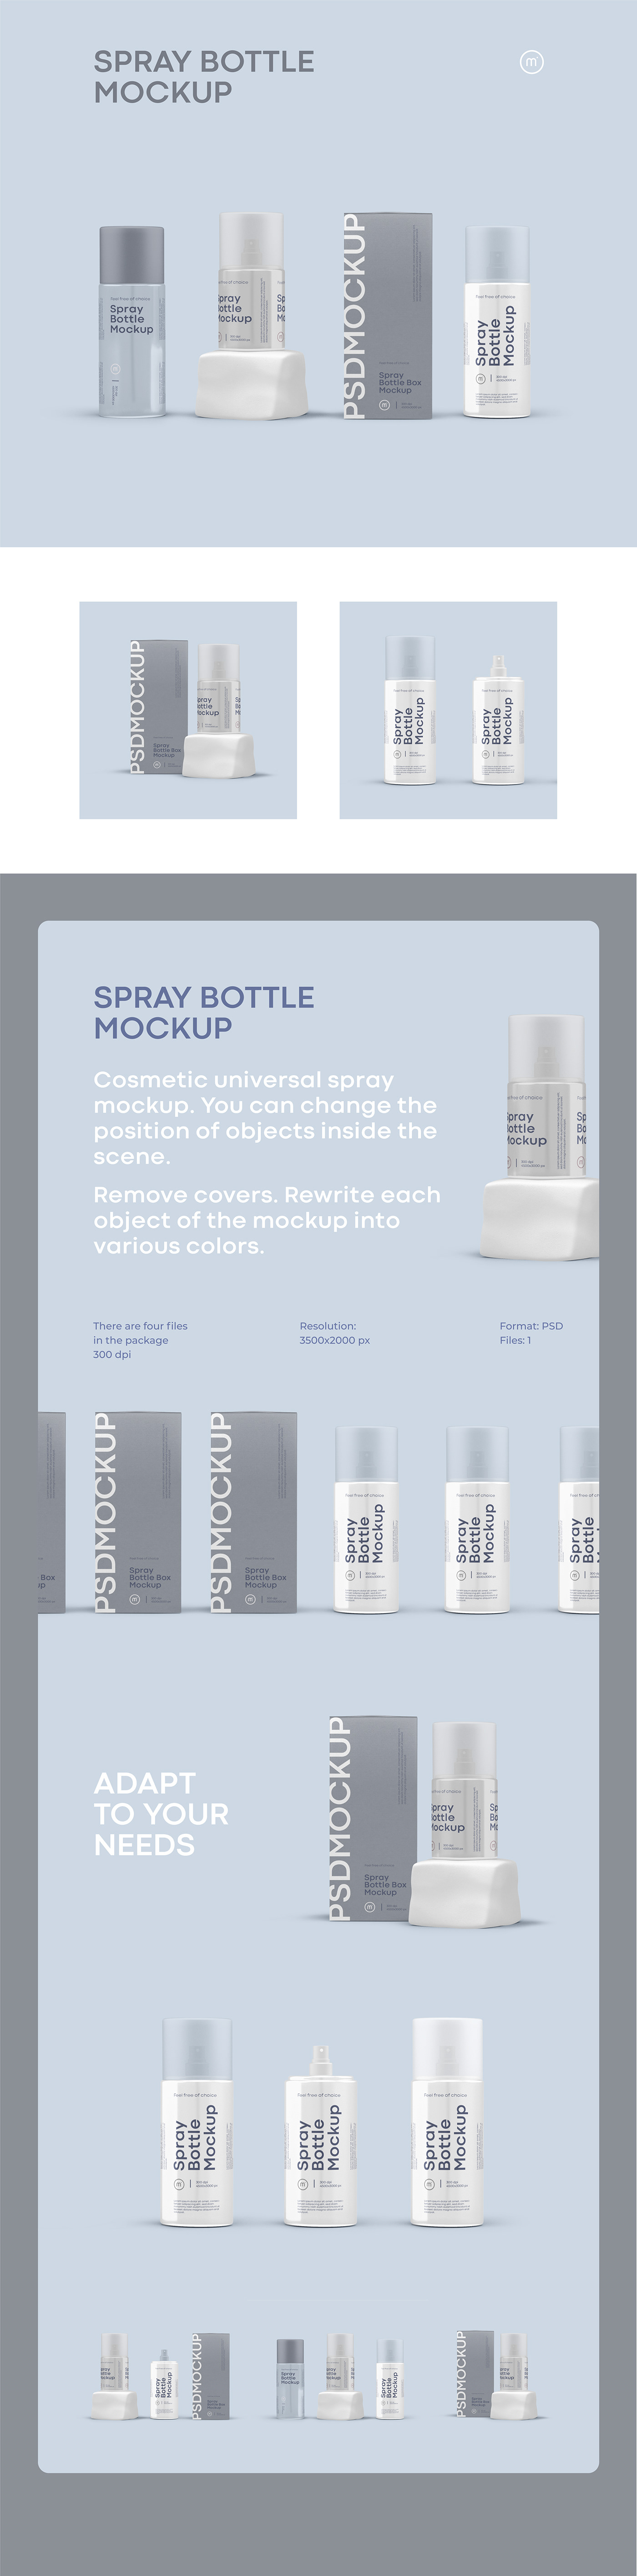 Mockup free spray bottle psd cosmetics Packaging